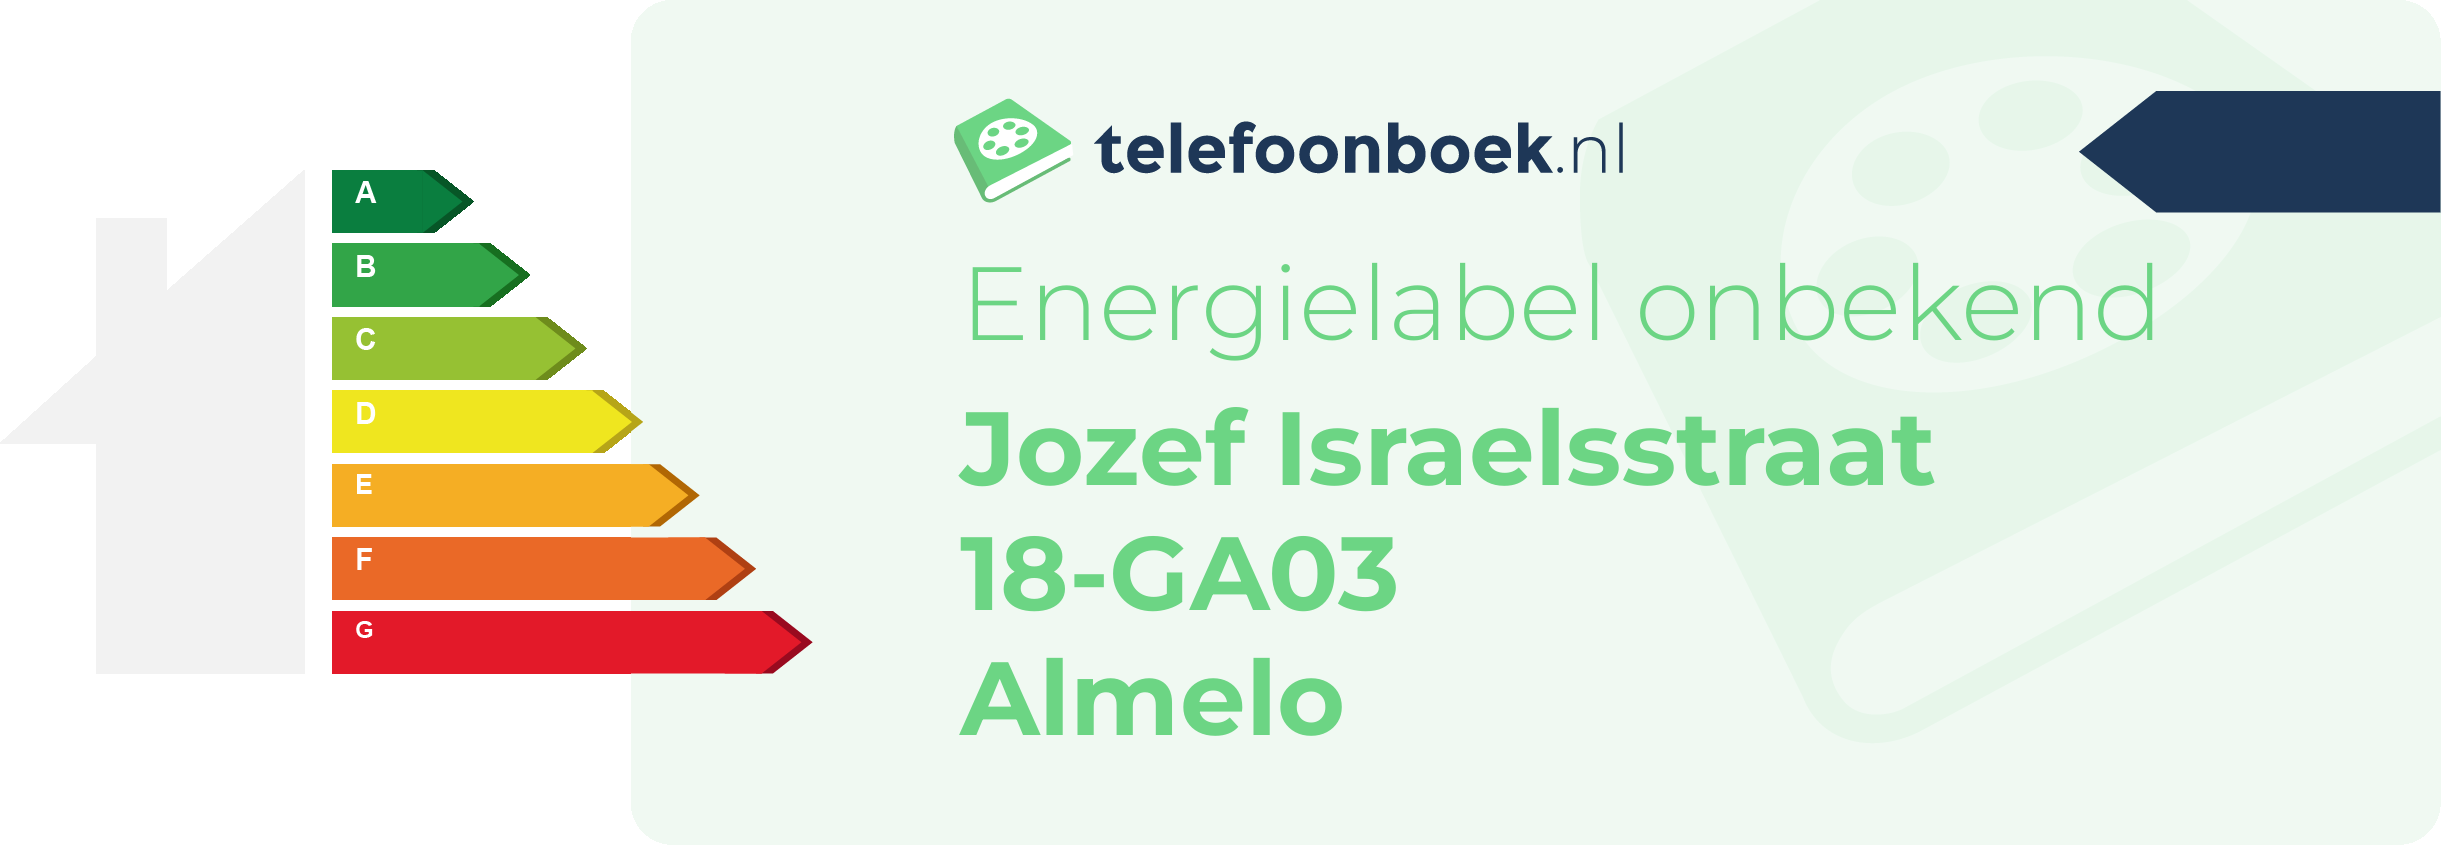 Energielabel Jozef Israelsstraat 18-GA03 Almelo